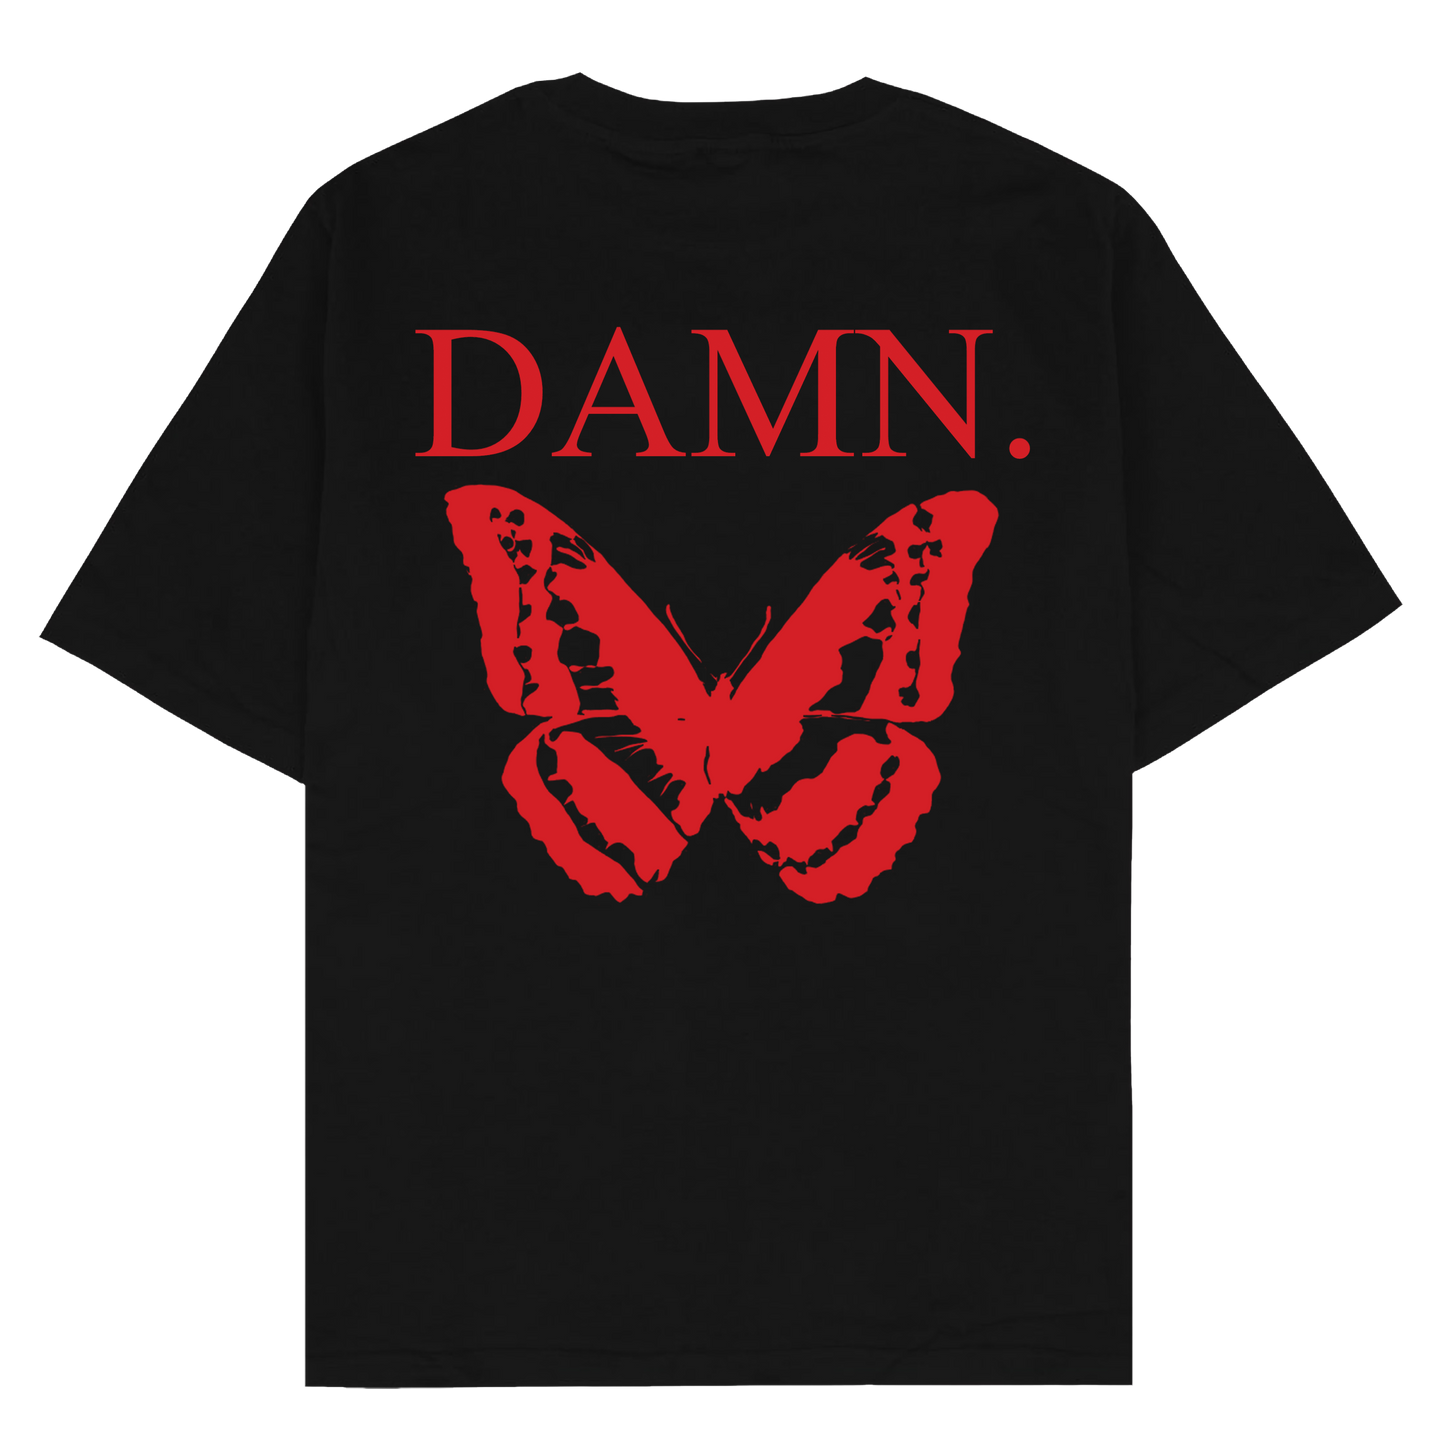 Kendrick Lamar "DAMN" - Oversized T-Shirt